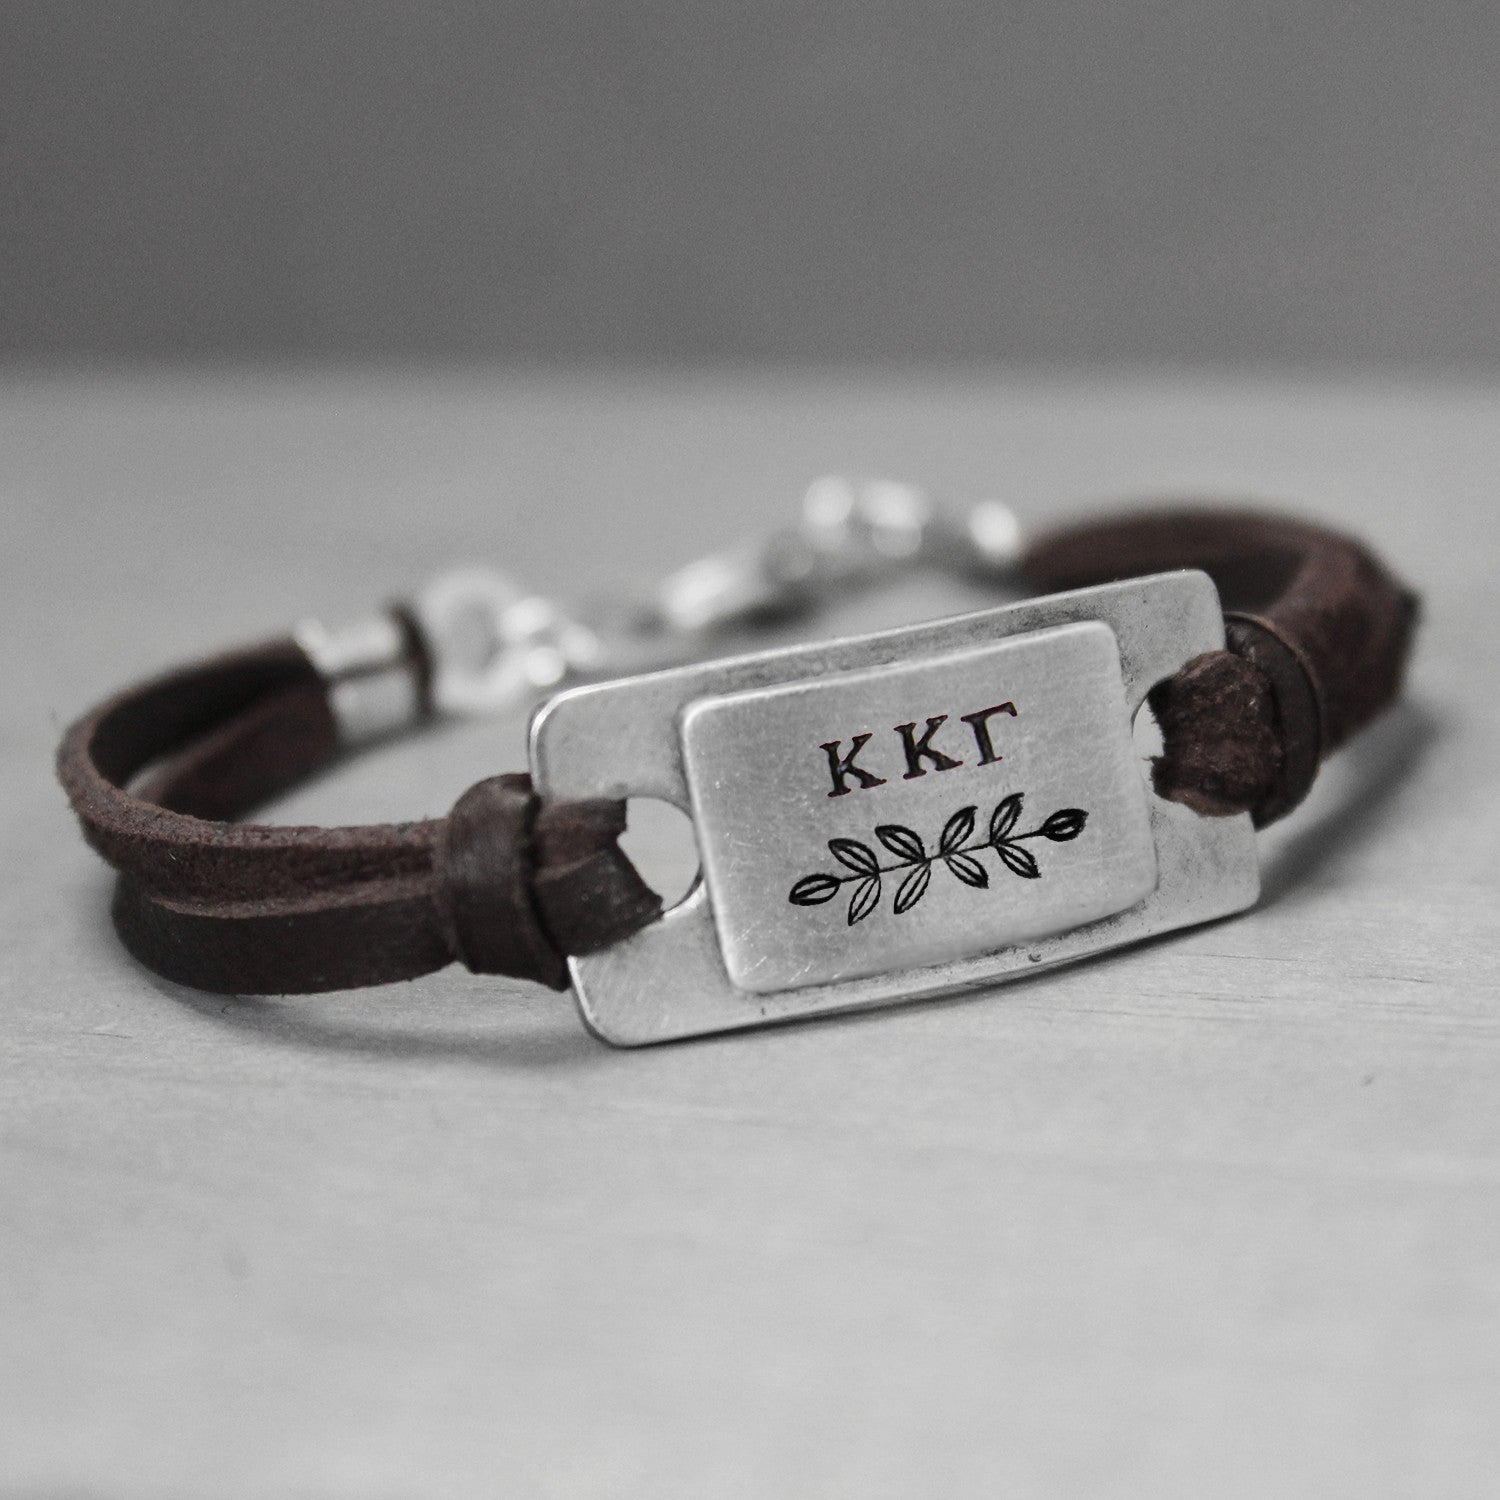 Kappa Kappa Gamma Bracelet White